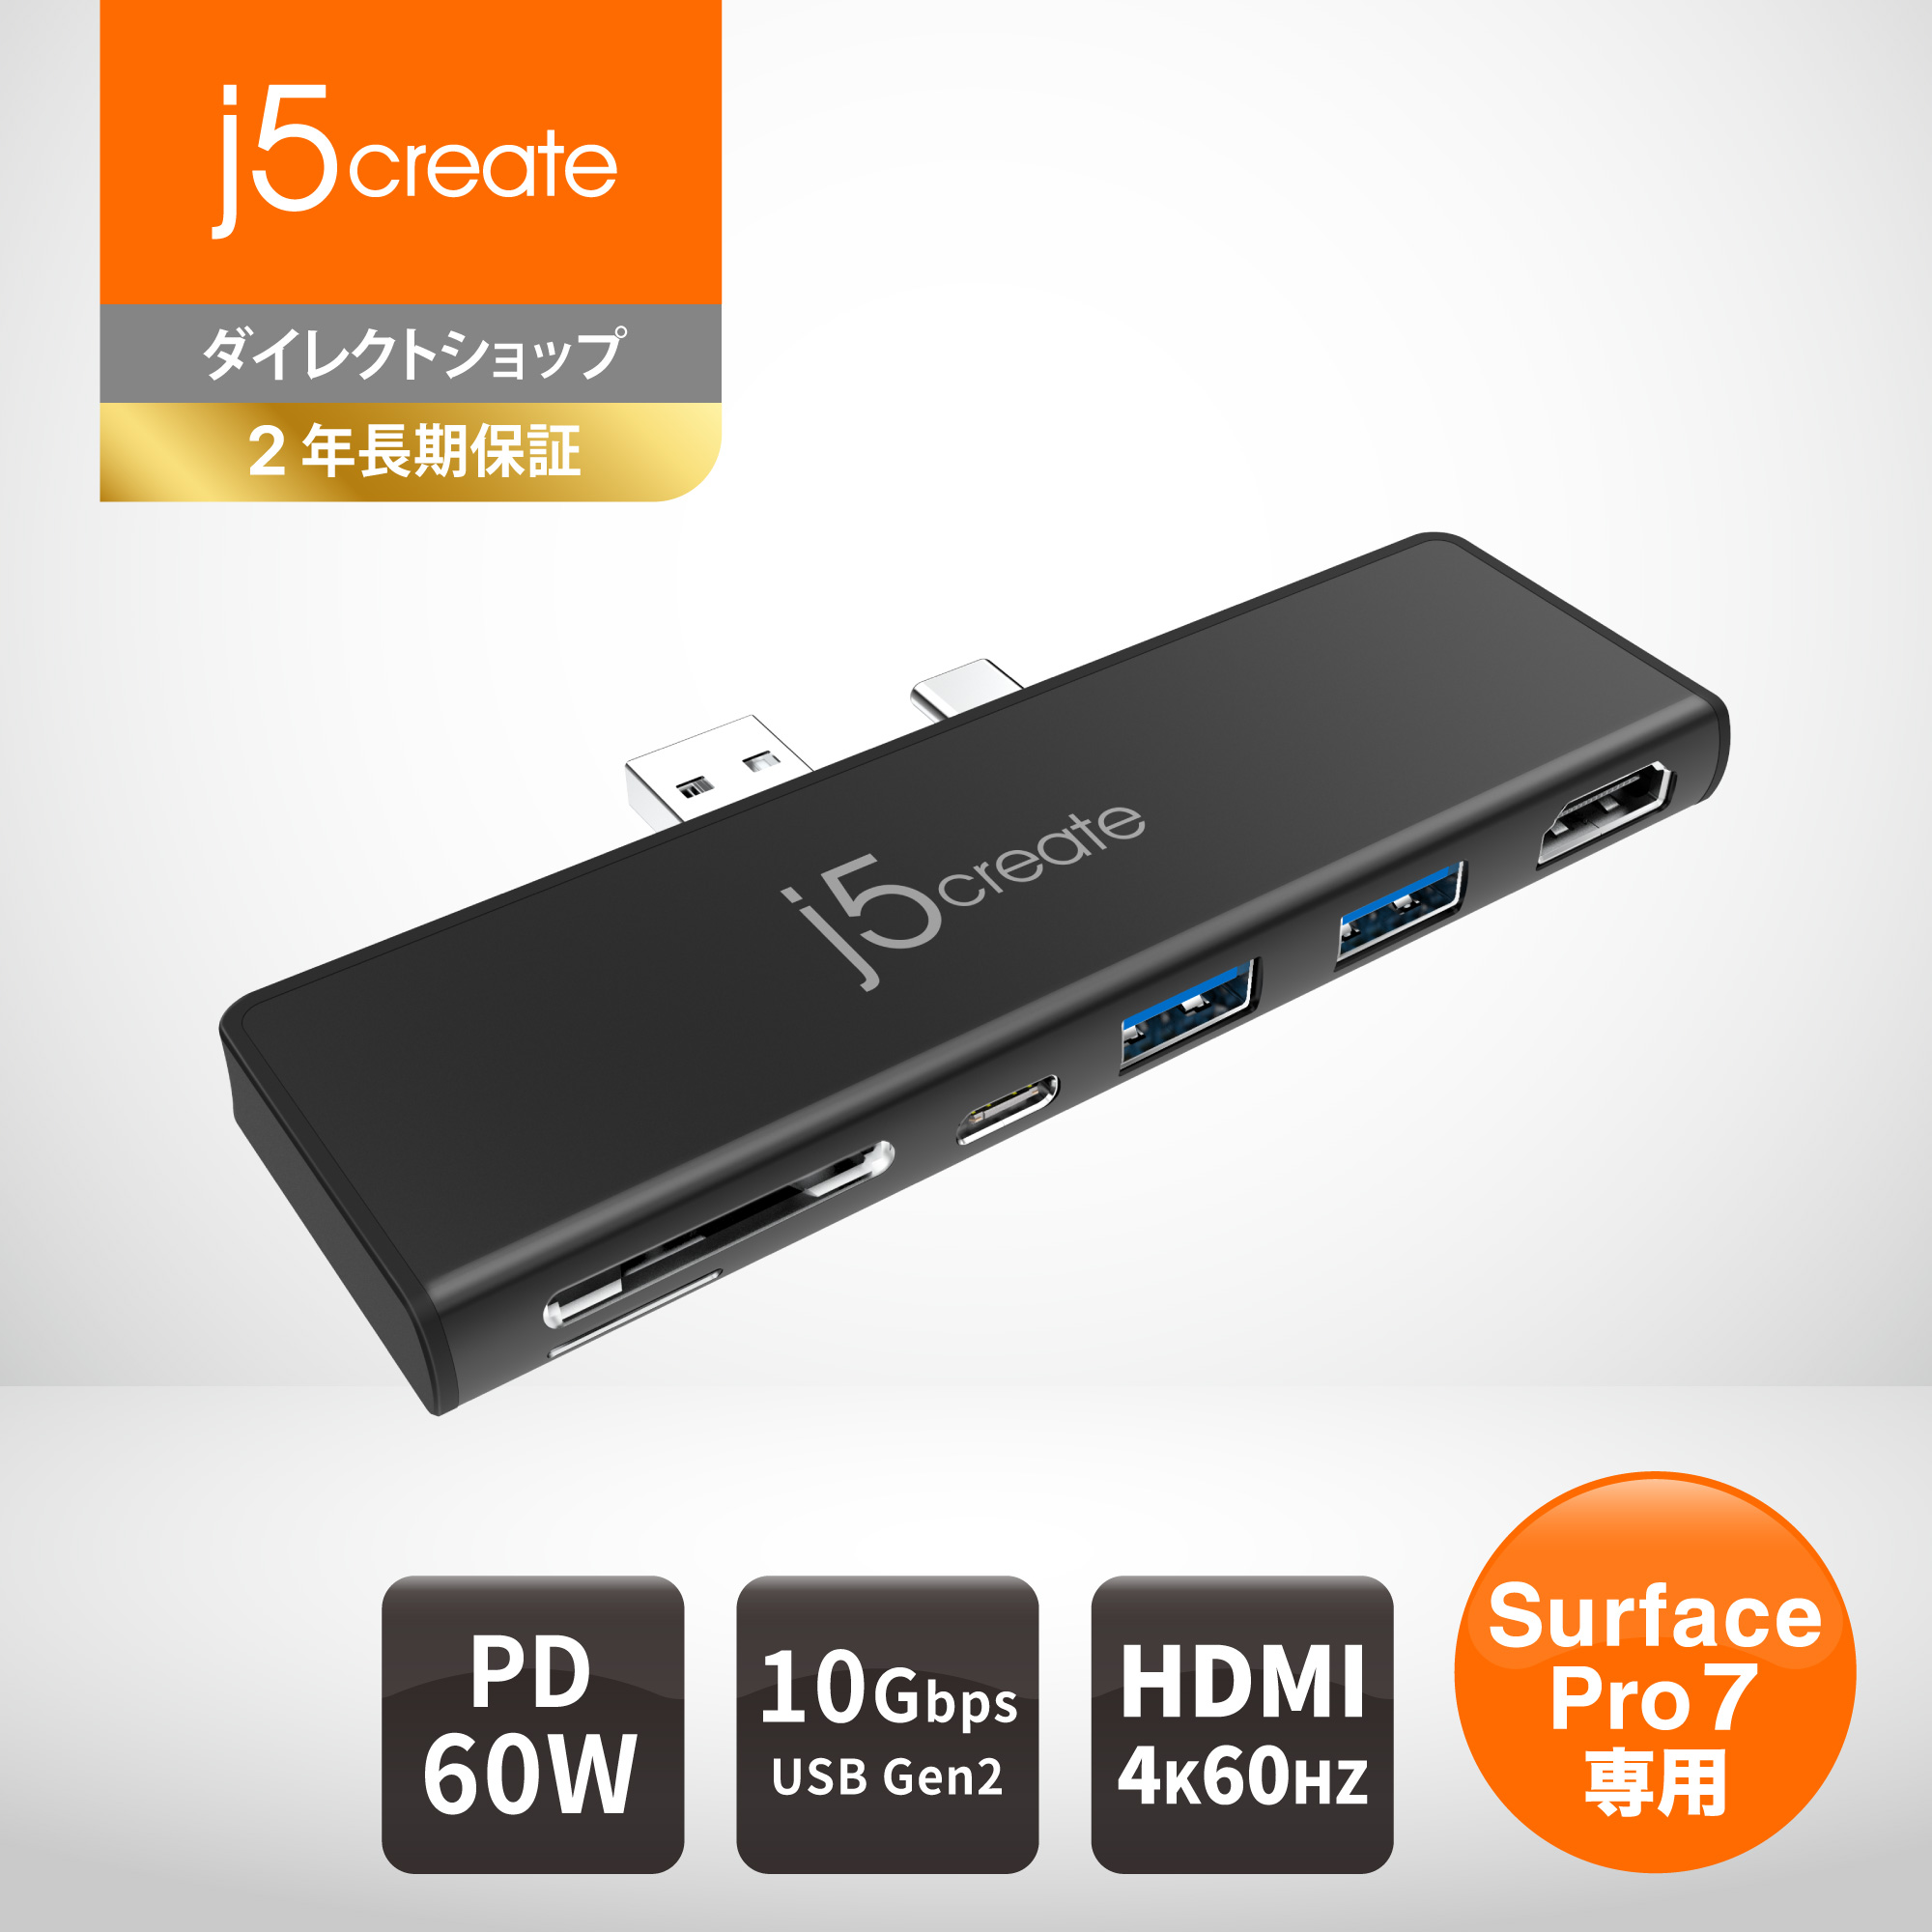 Citron sandhed suffix 楽天市場】j5 create Surface Pro 7専用 ミニ ドッキングステーション ブラック JCD324B-EJ マルチハブ USBハブ  【USB-A 3.1 Gen2 10G×2 , USB-C 3.1 Gen2 10G×1 , 4K 60Hz HDMI ,  MicroSD/SDスロット】 Power Delivery 最大60W 超スリム設計 アルミニウム筐体 :